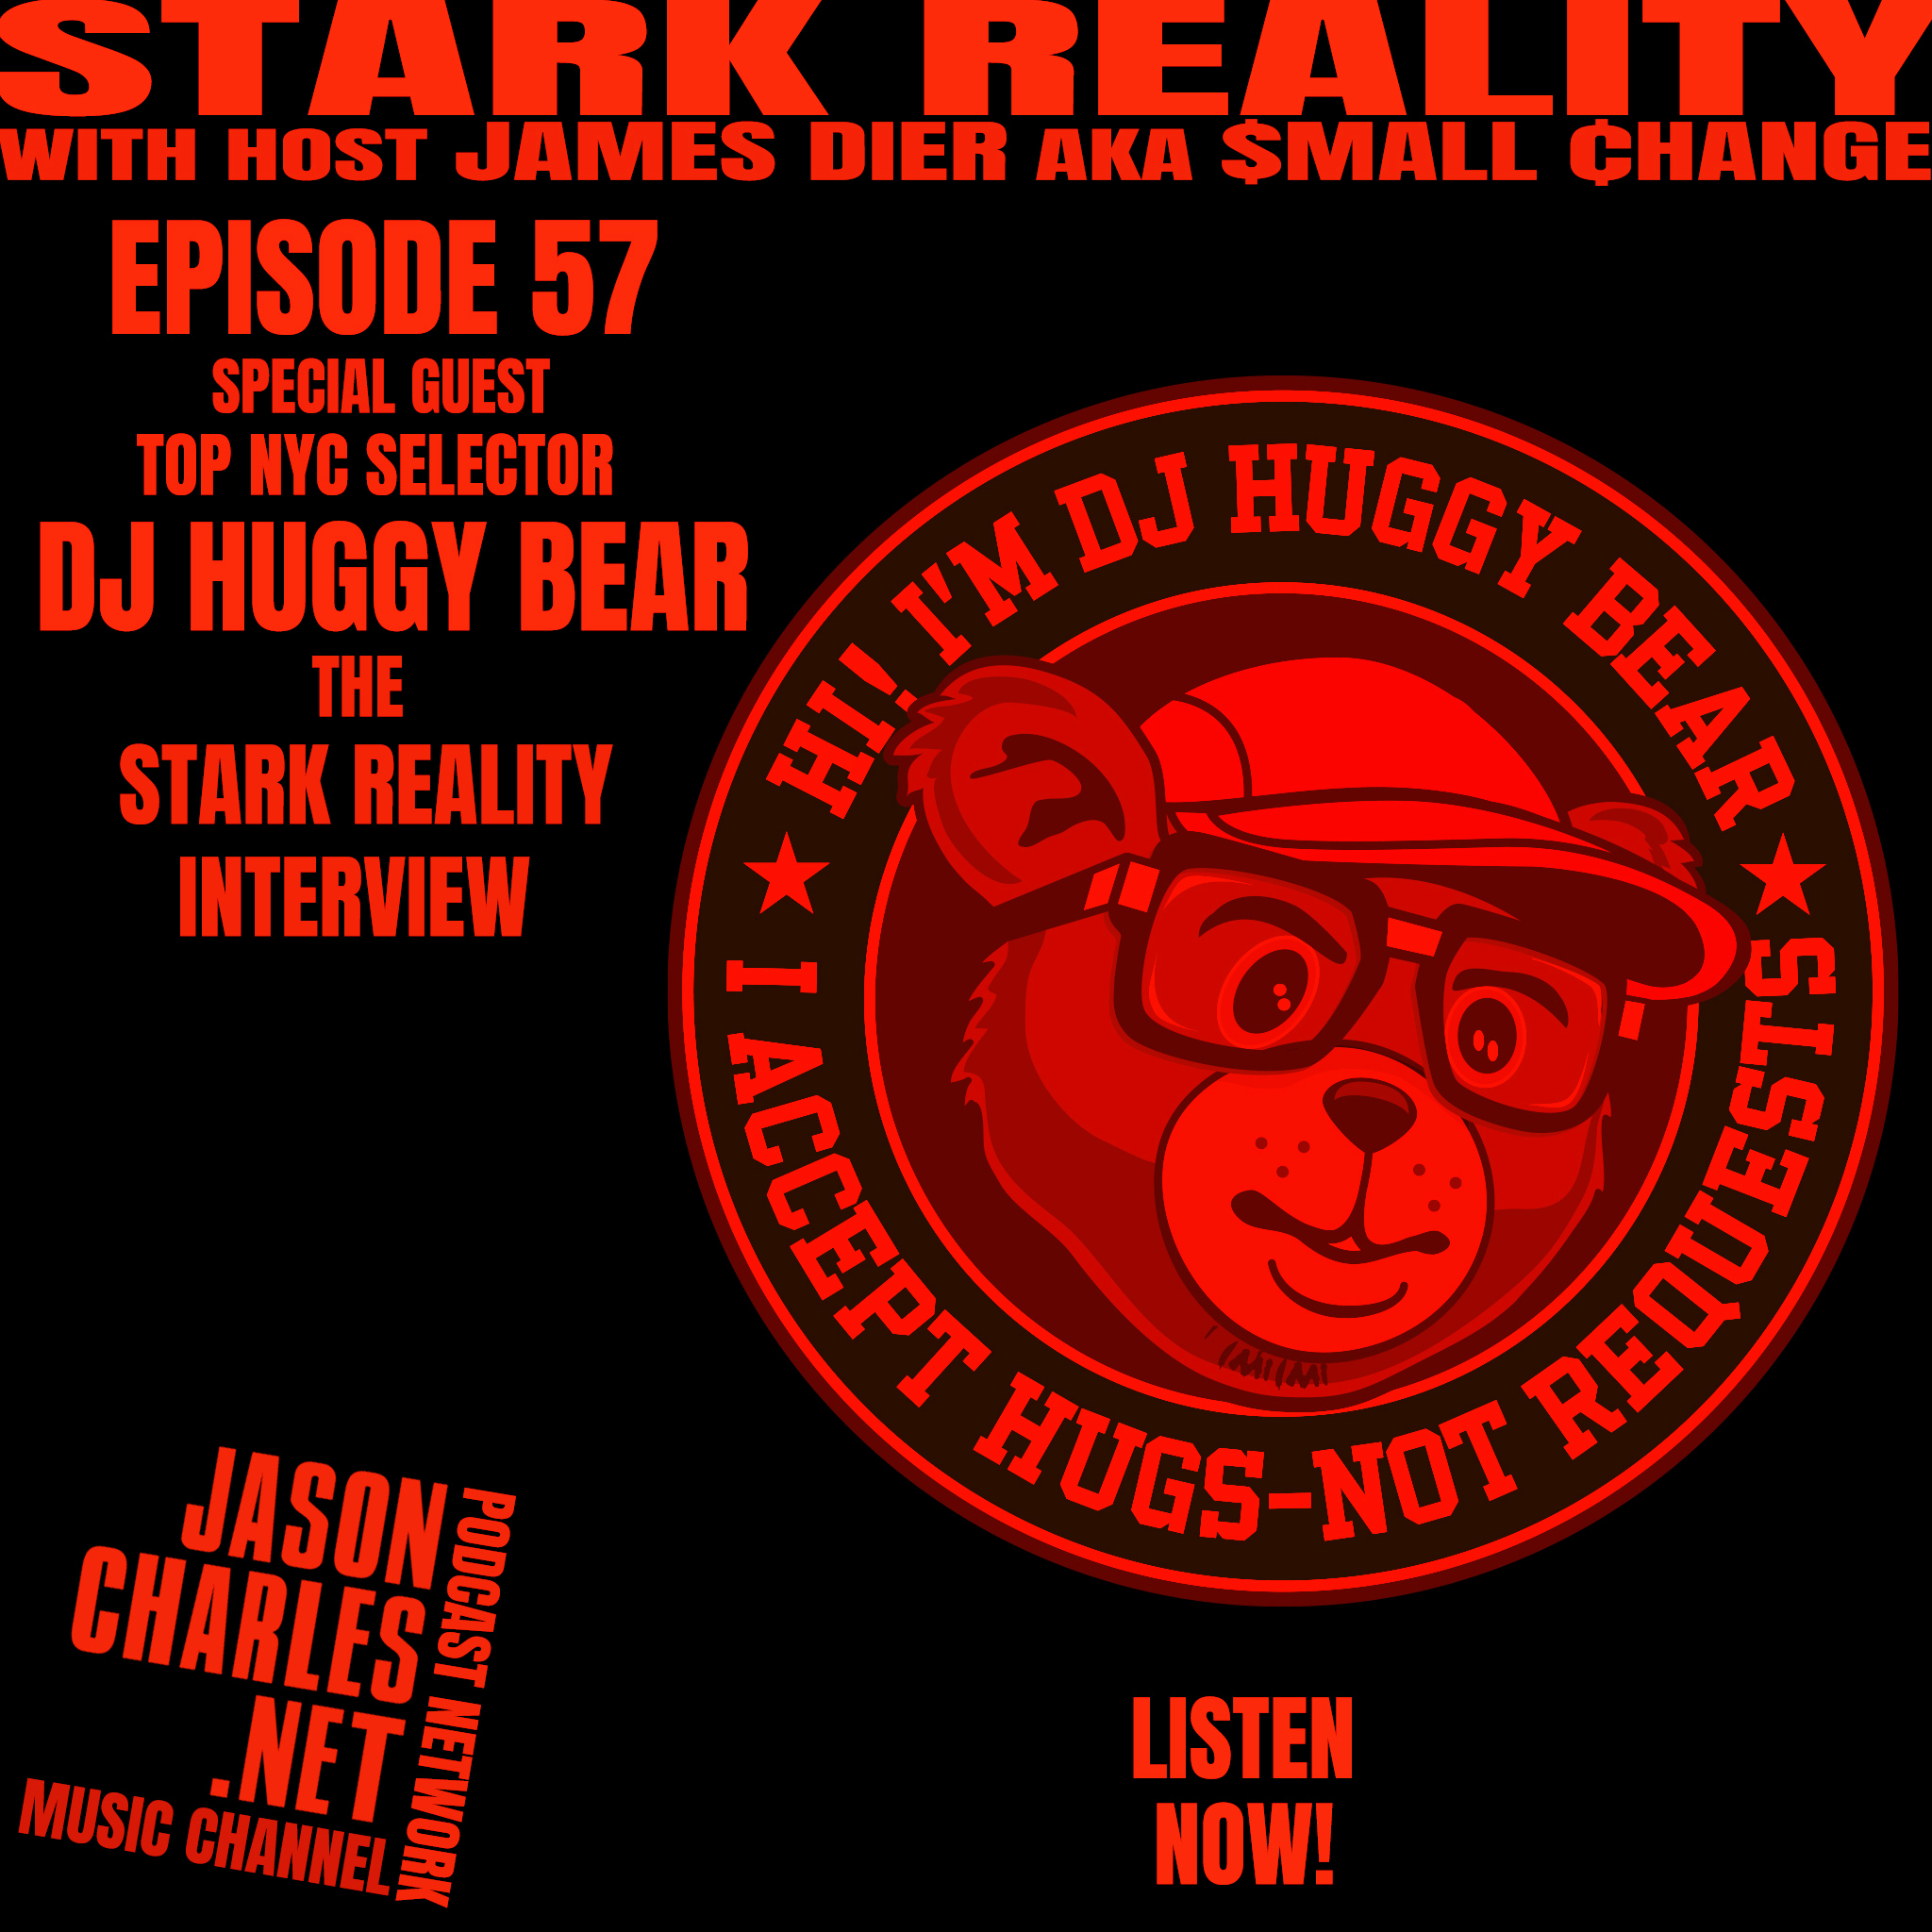 STARK REALITY Episode 57 Guest DJ HUGGY BEAR